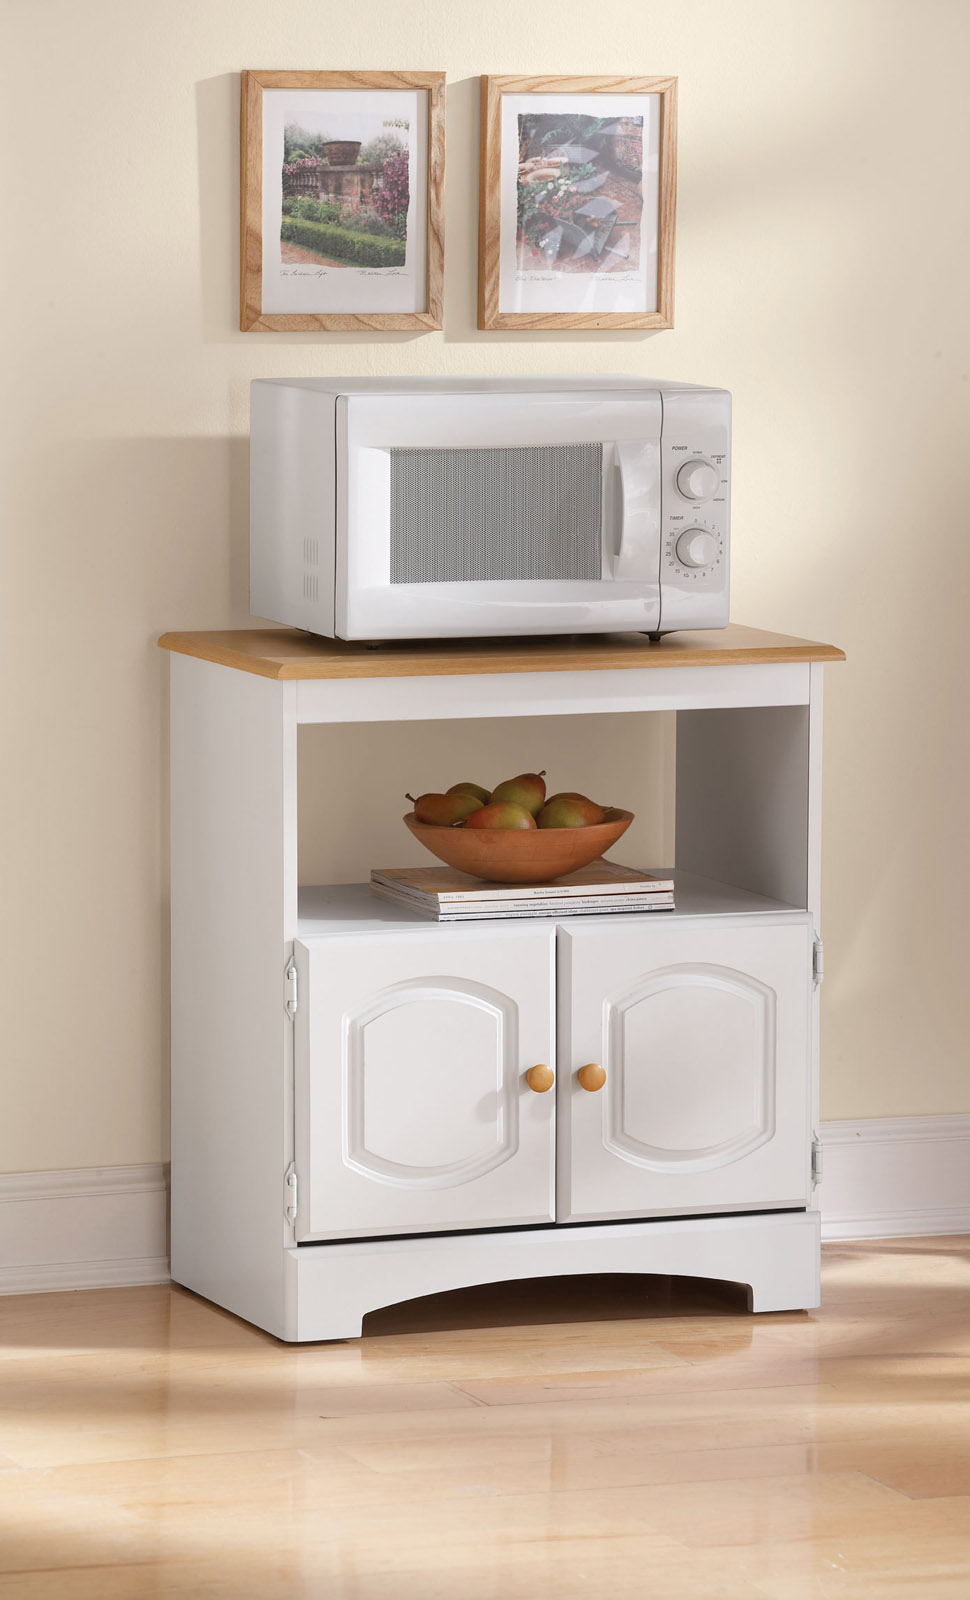 2-Shelf Kitchen Utility Stand in White